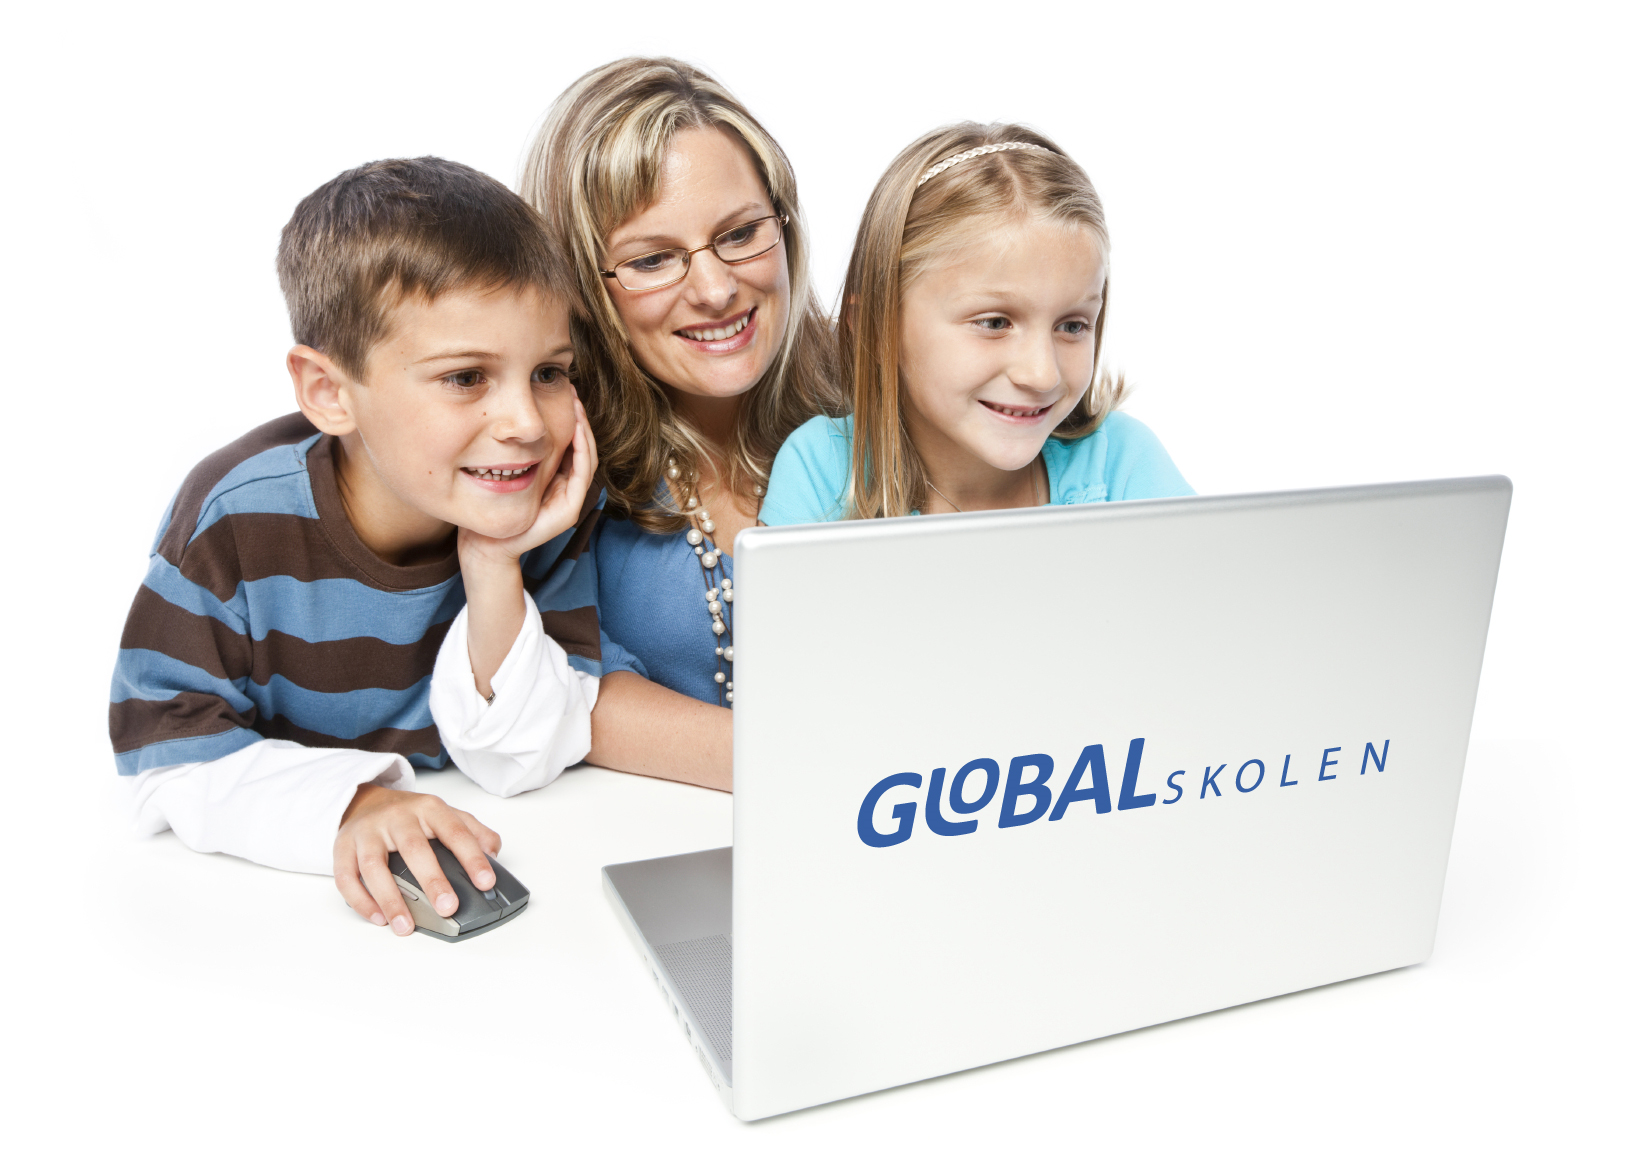 Globalskolen - Photo:Globalskolen